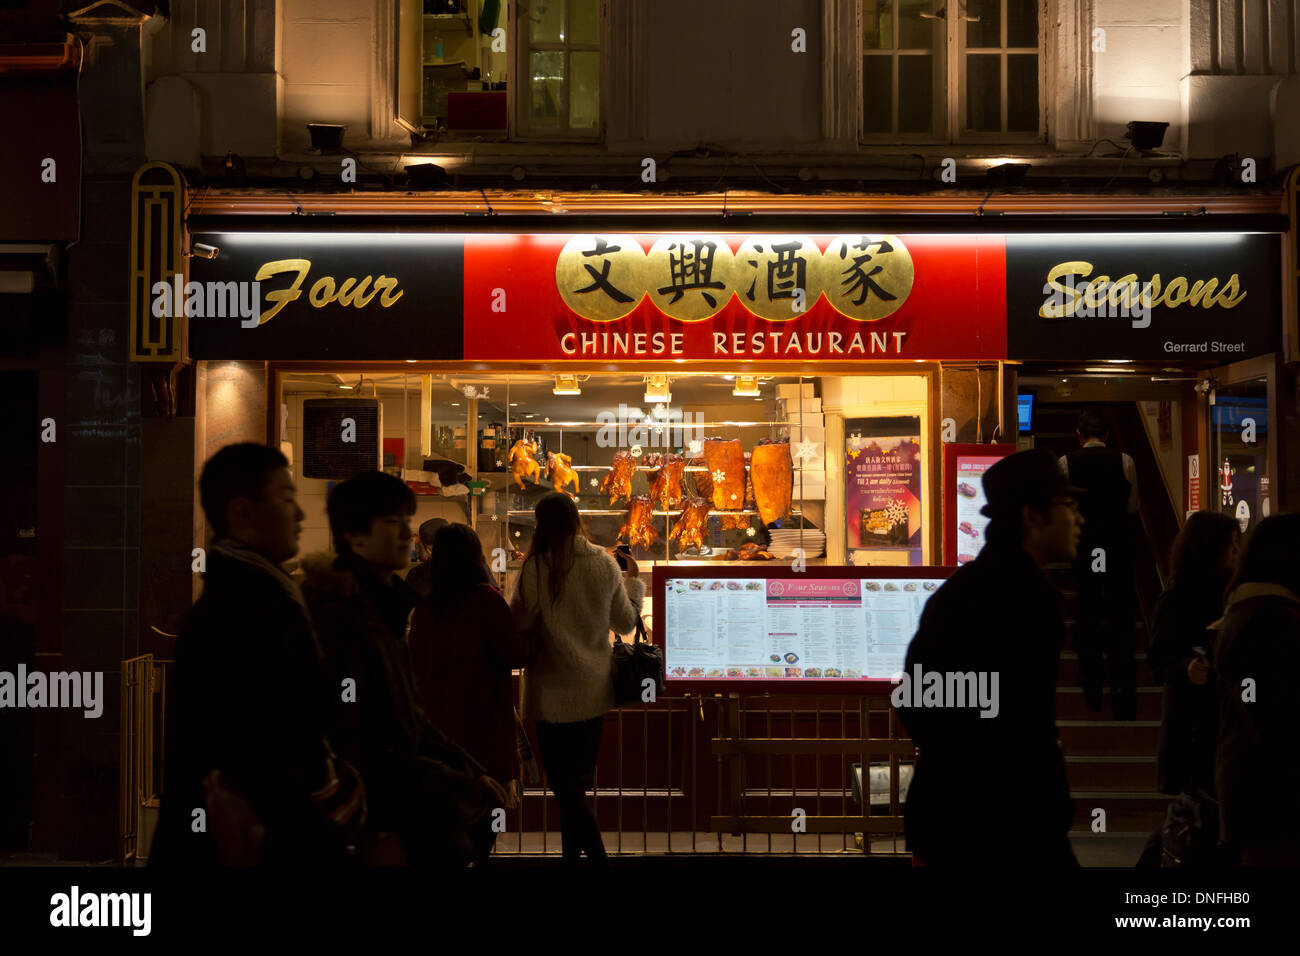 Four Seasons Chinese Restaurant in Gerrard Street, London Chinatown,  England Stock Photo - Alamy